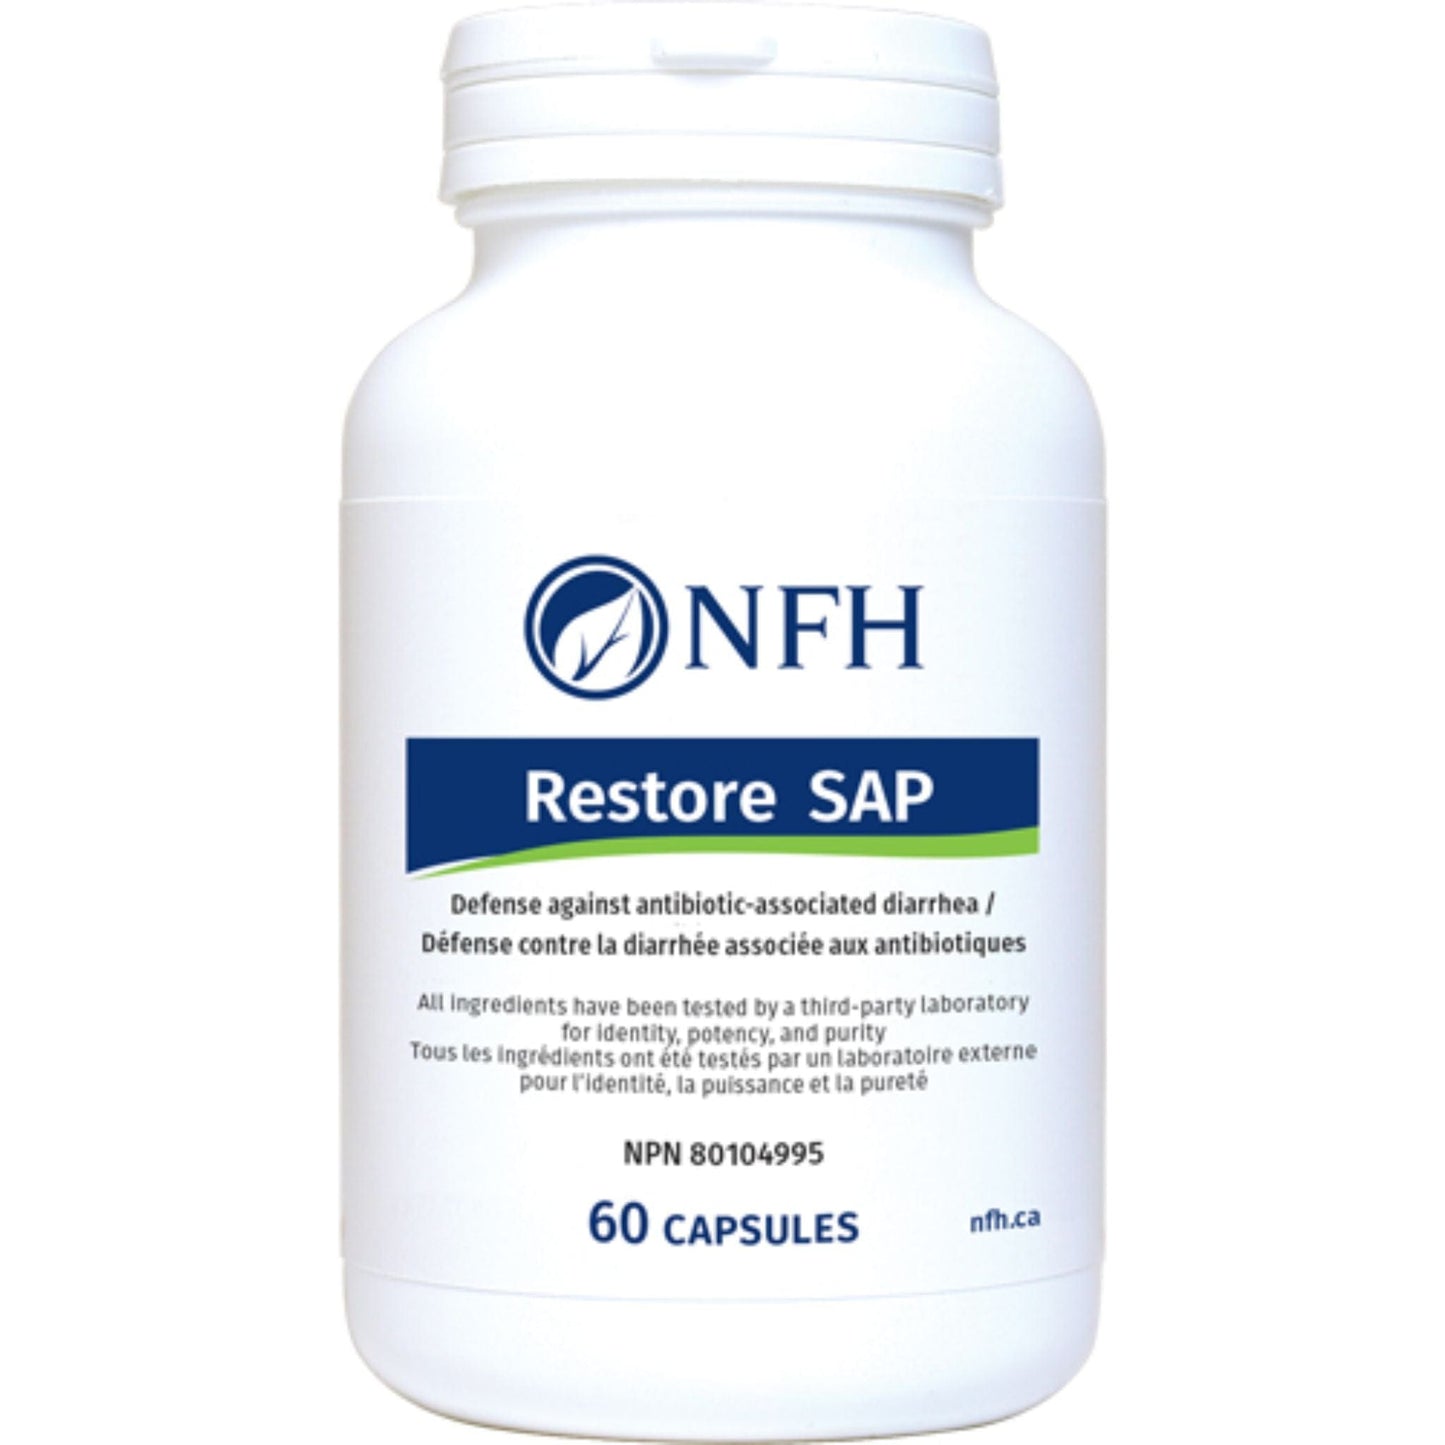 nfh-restore-sap-60-capsules